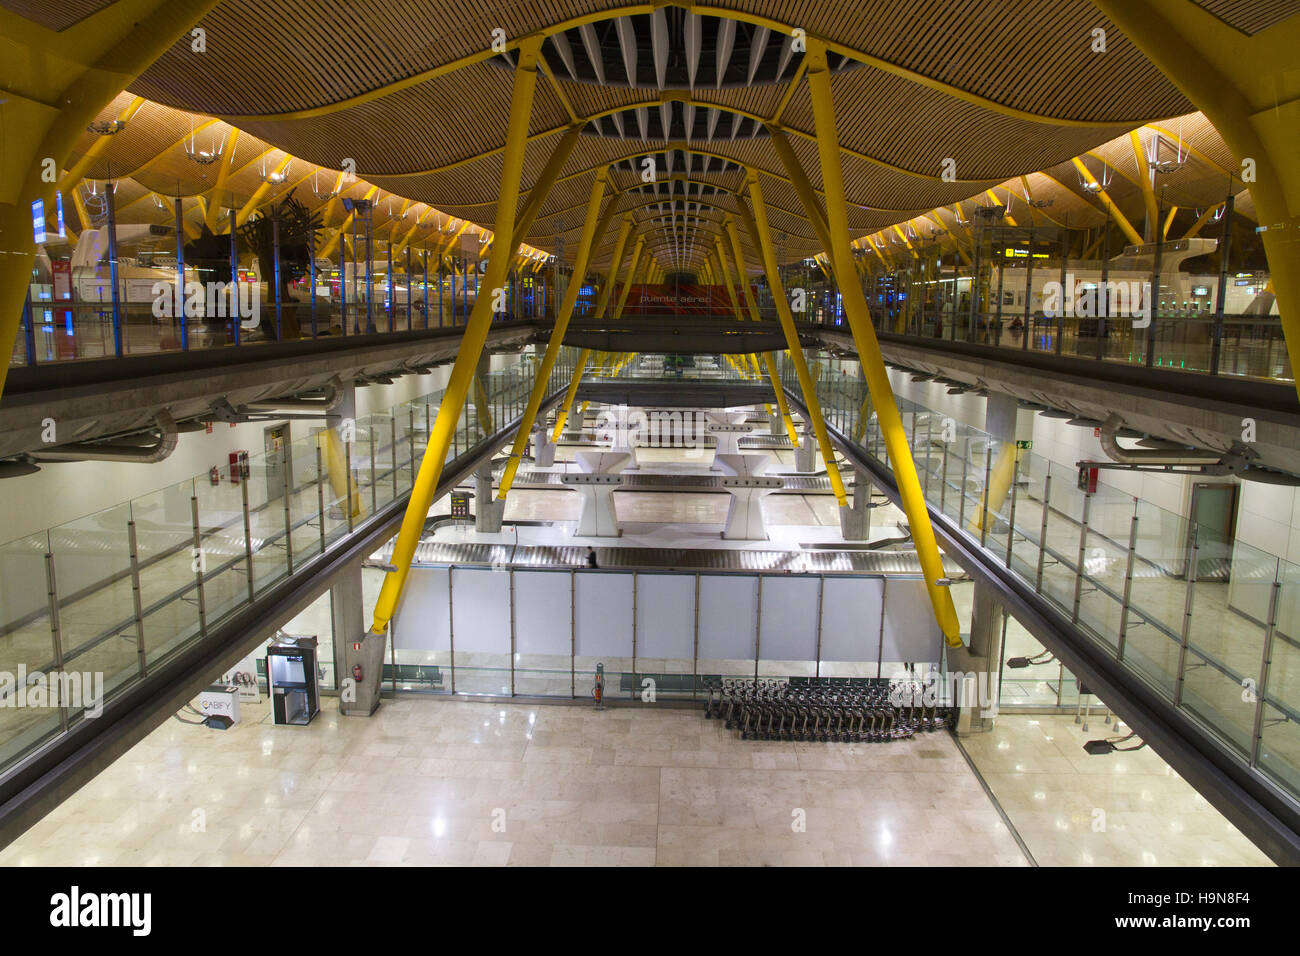 Madrid Spain park Airport interior 'no poeple' architecture Stock Photo